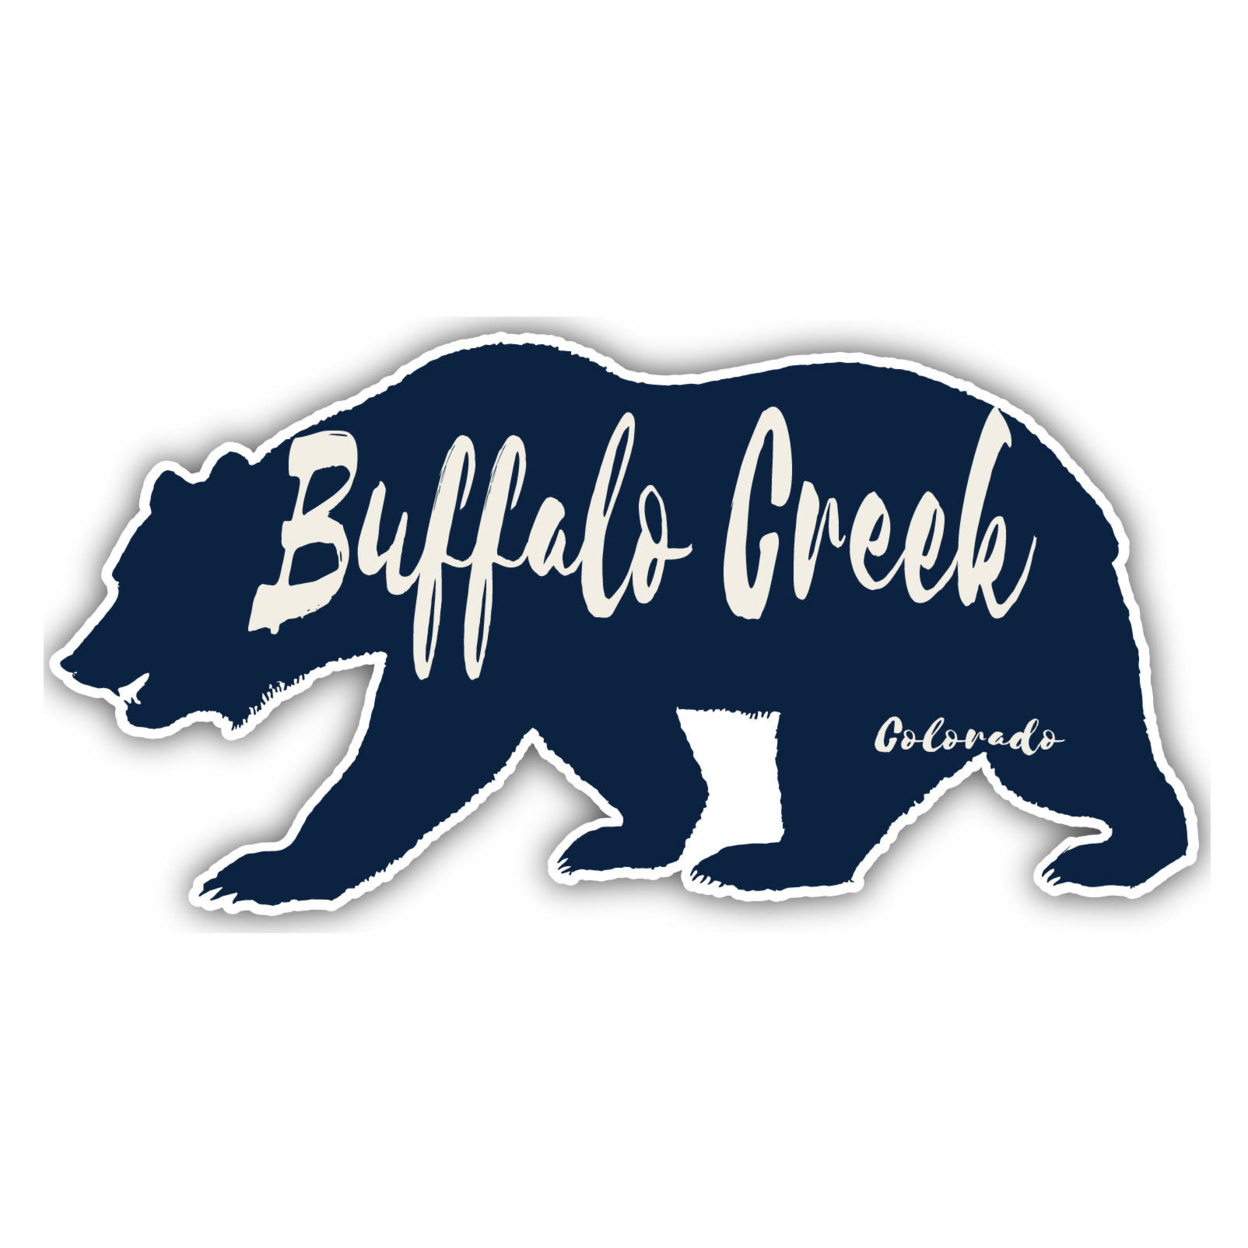 Buffalo Creek Colorado Souvenir Decorative Stickers (Choose Theme And Size) - Single Unit, 8-Inch, Bear